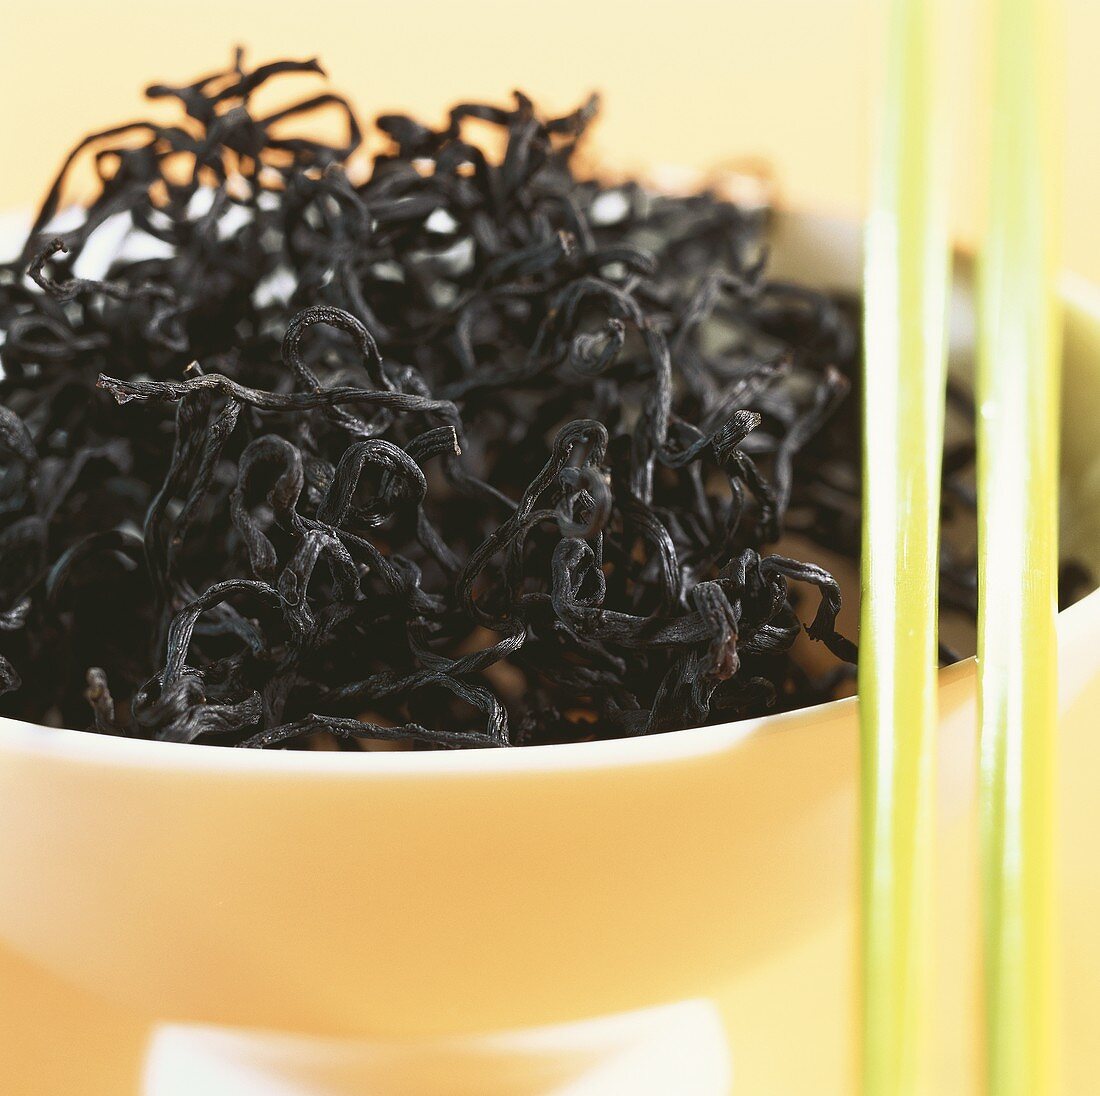 Hijiki (black seaweed)